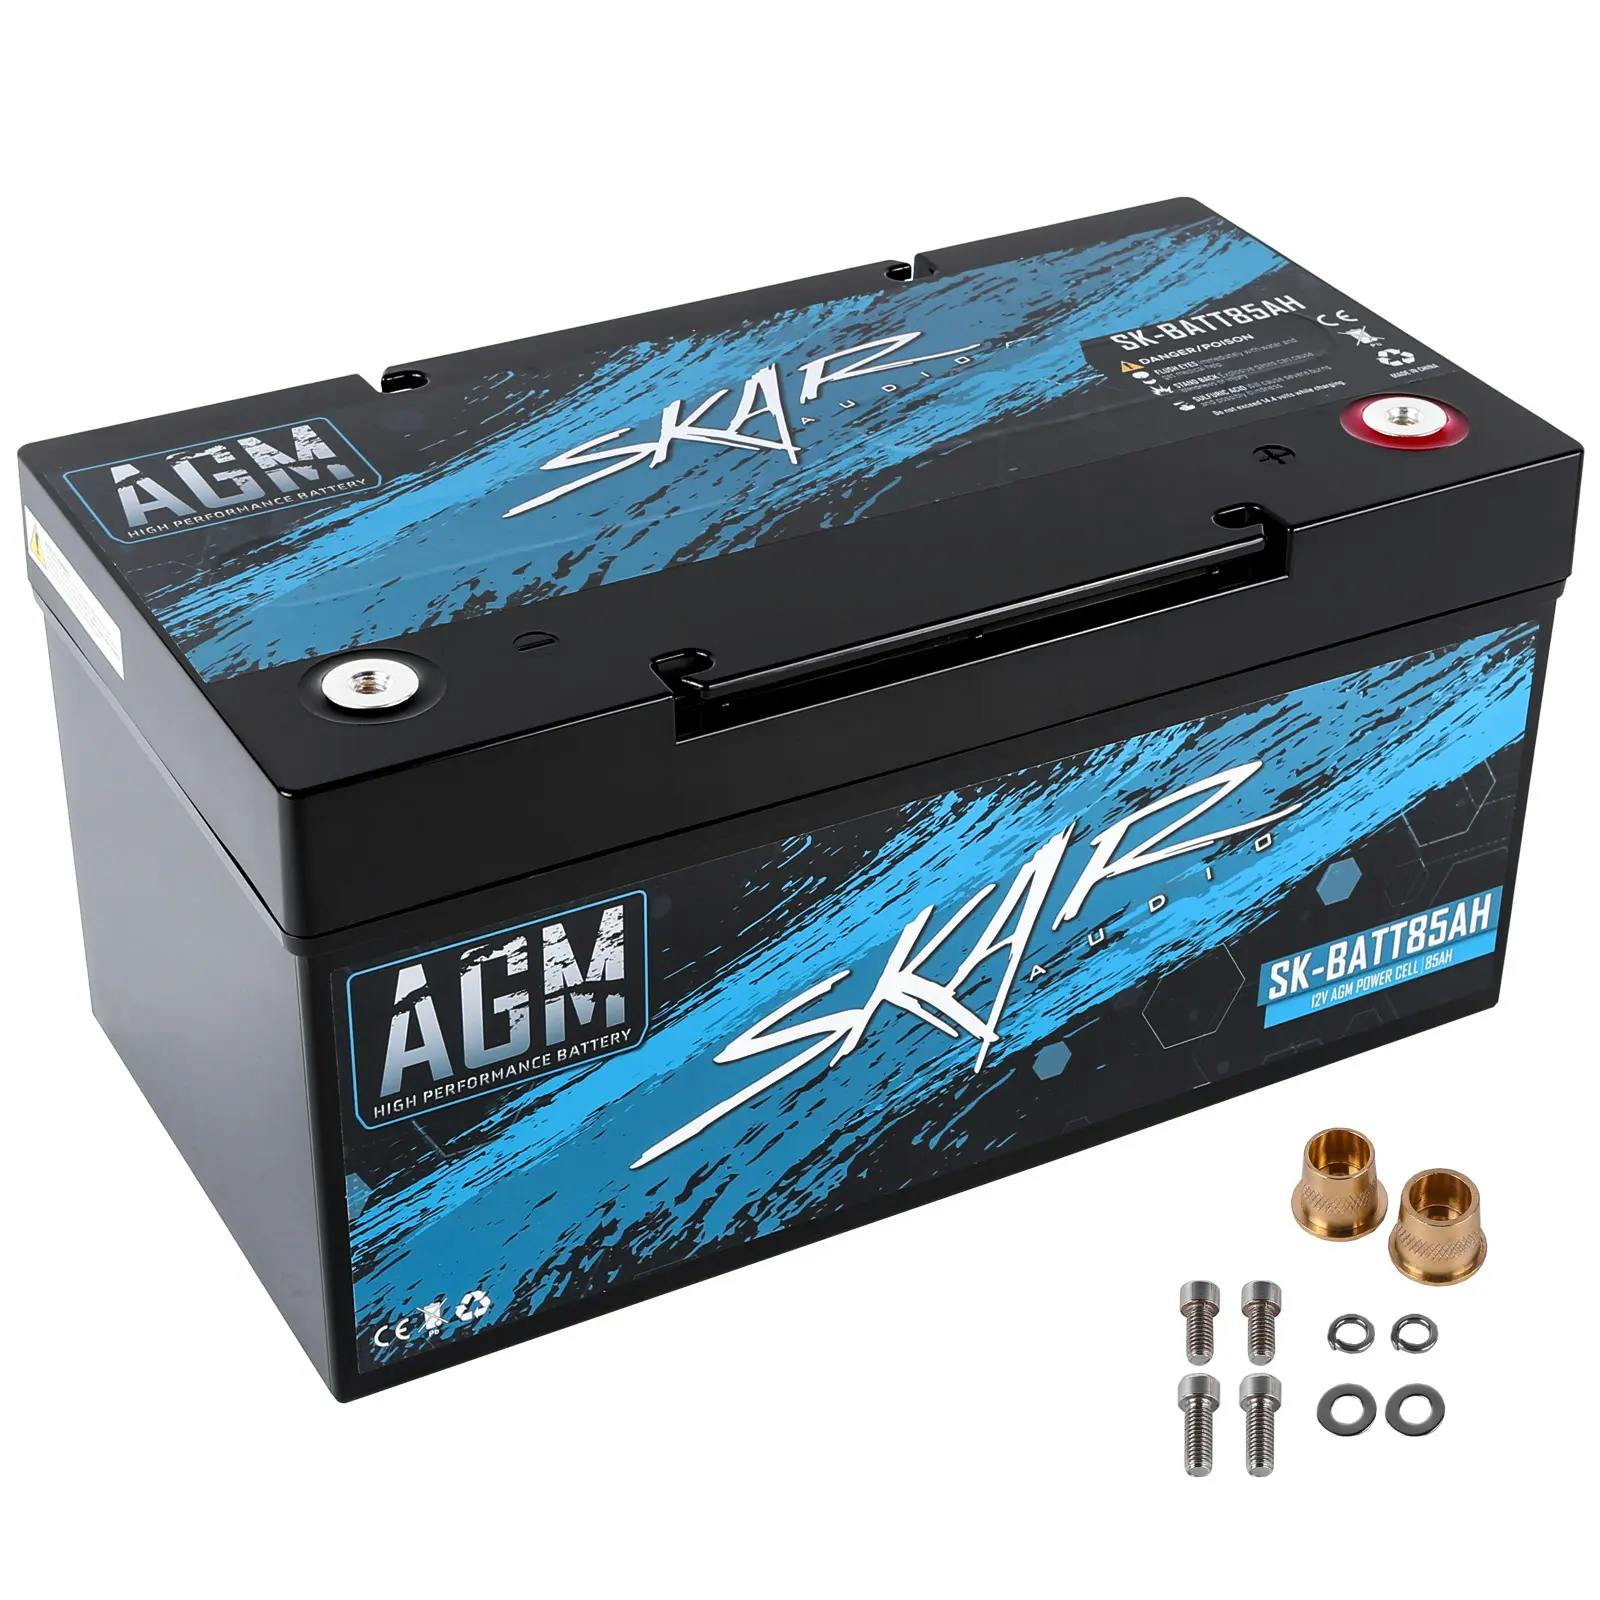 Featured Product Photo 1 for SK-BATT85AH | 12V 85Ah AGM High Performance Car Audio Battery